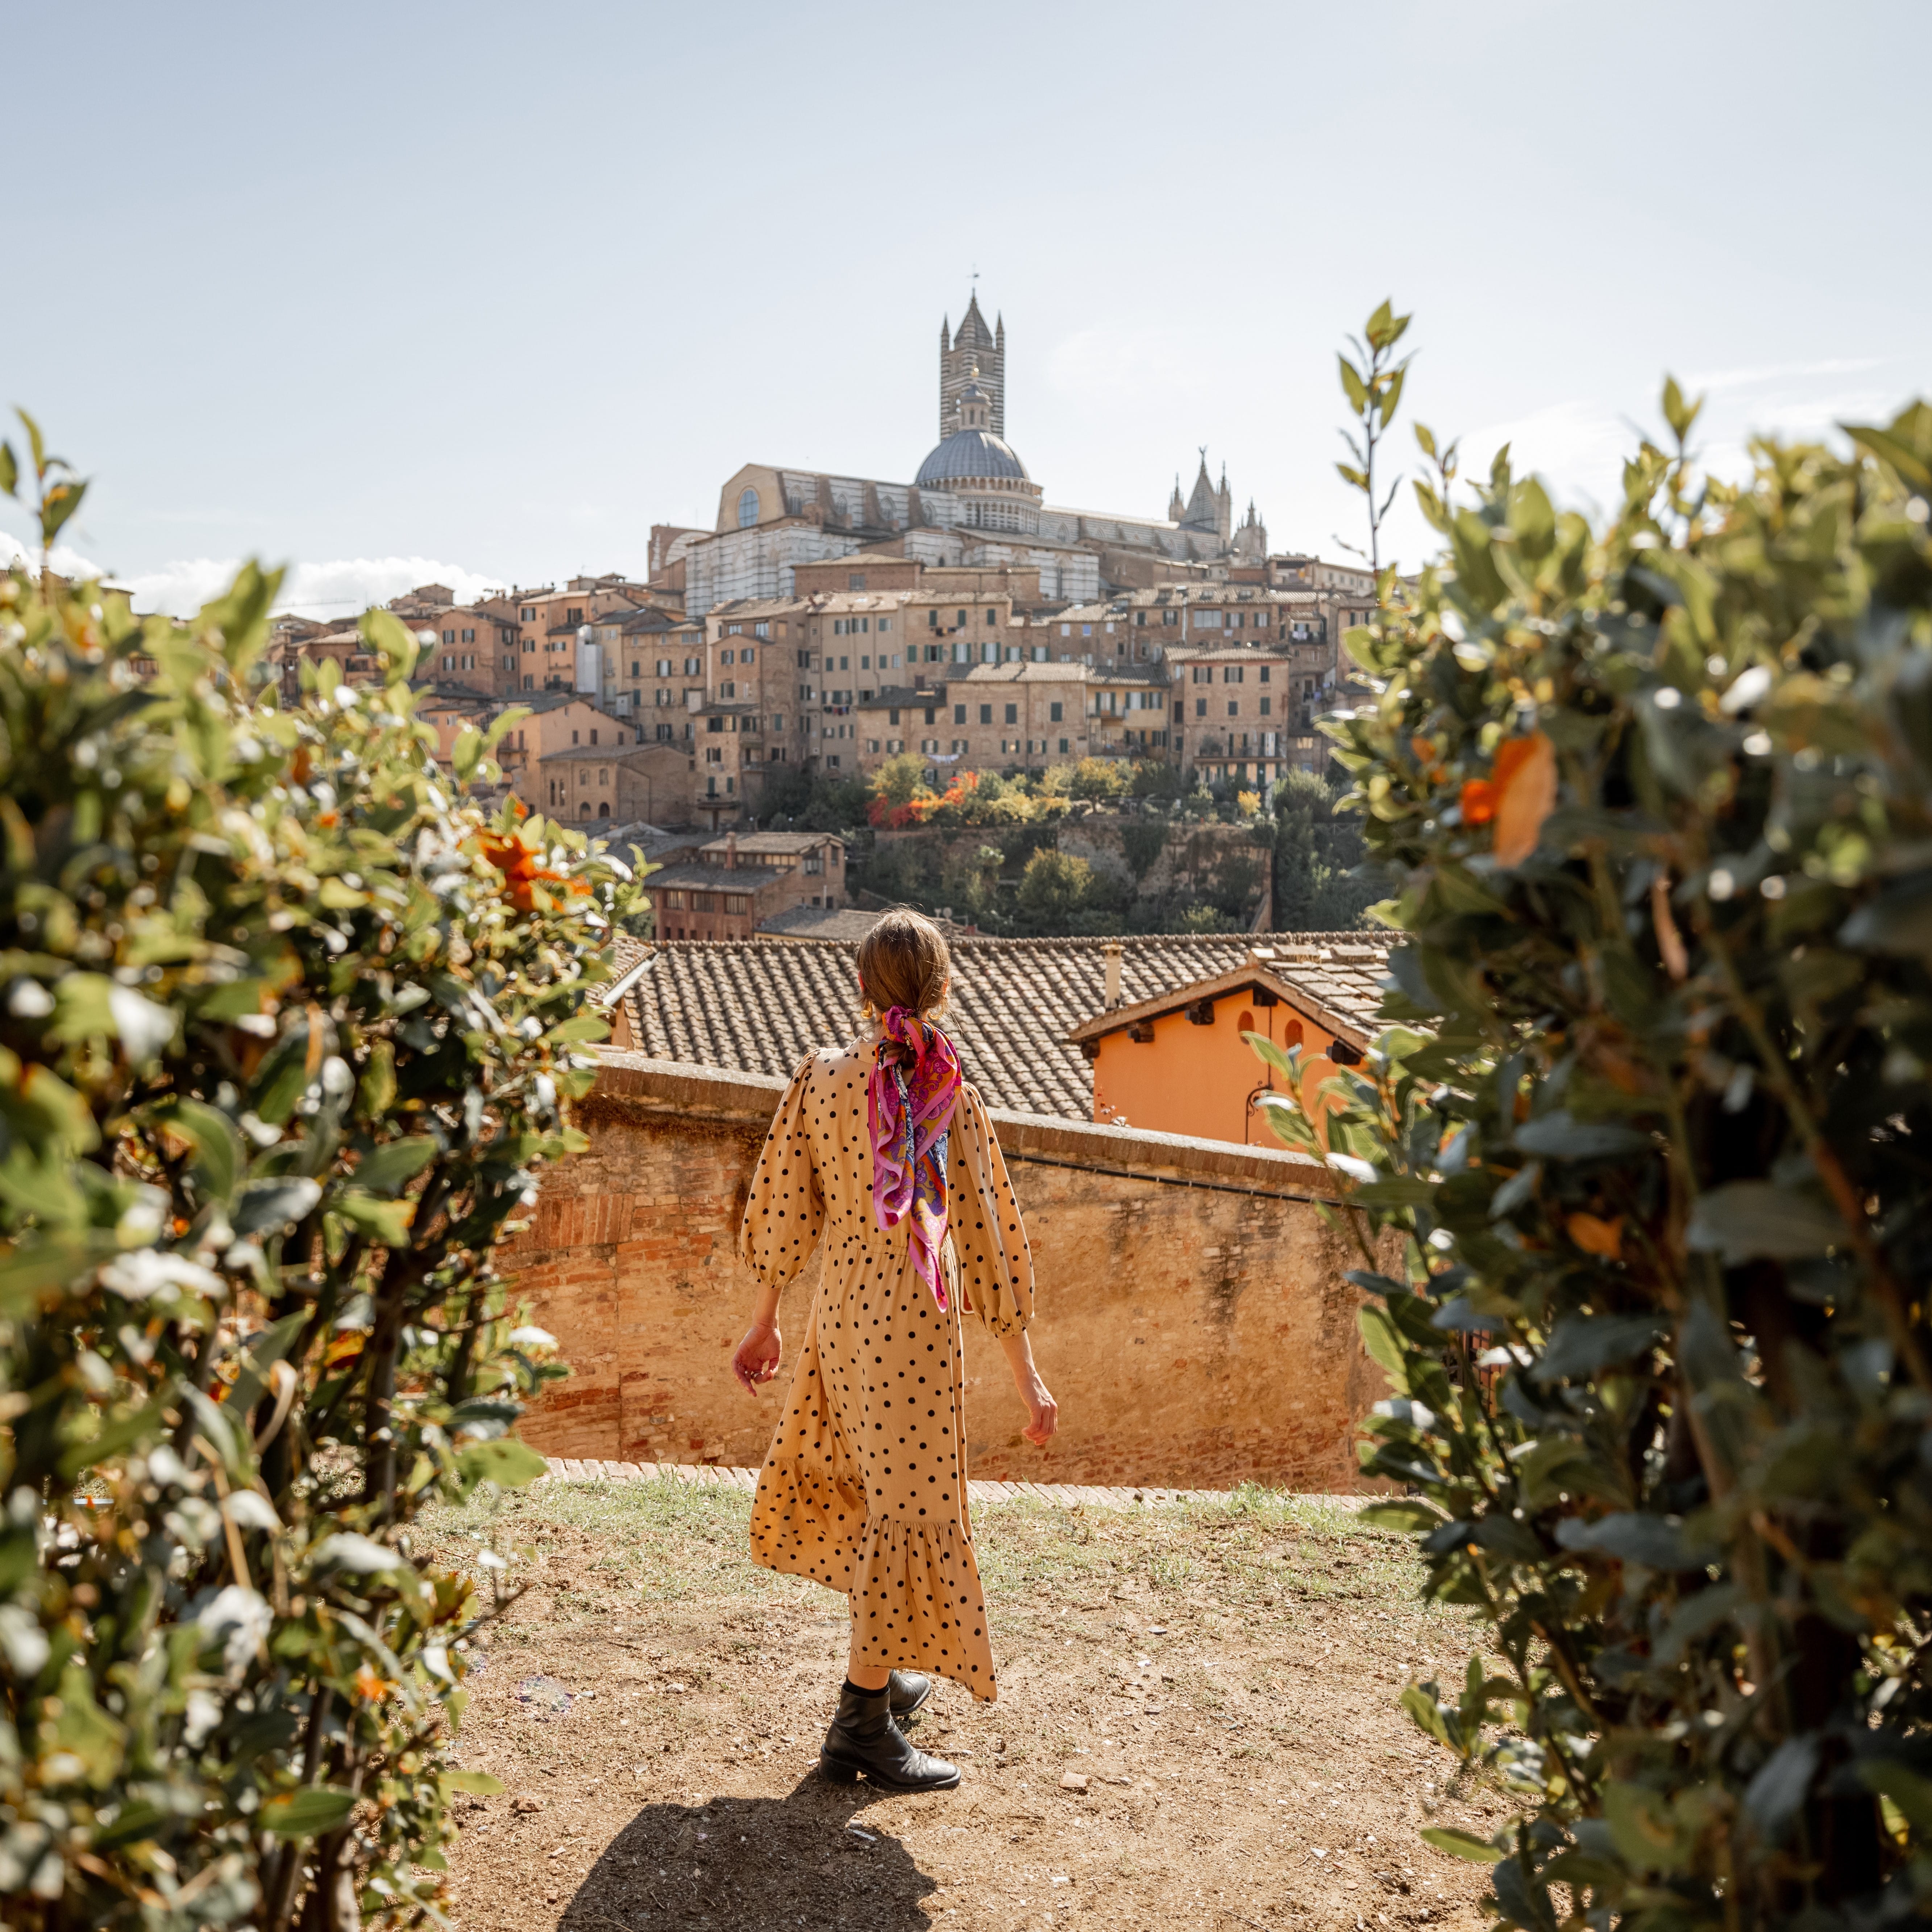 Siena, Tuscany - credits: RossHelen/Shutterstock.com